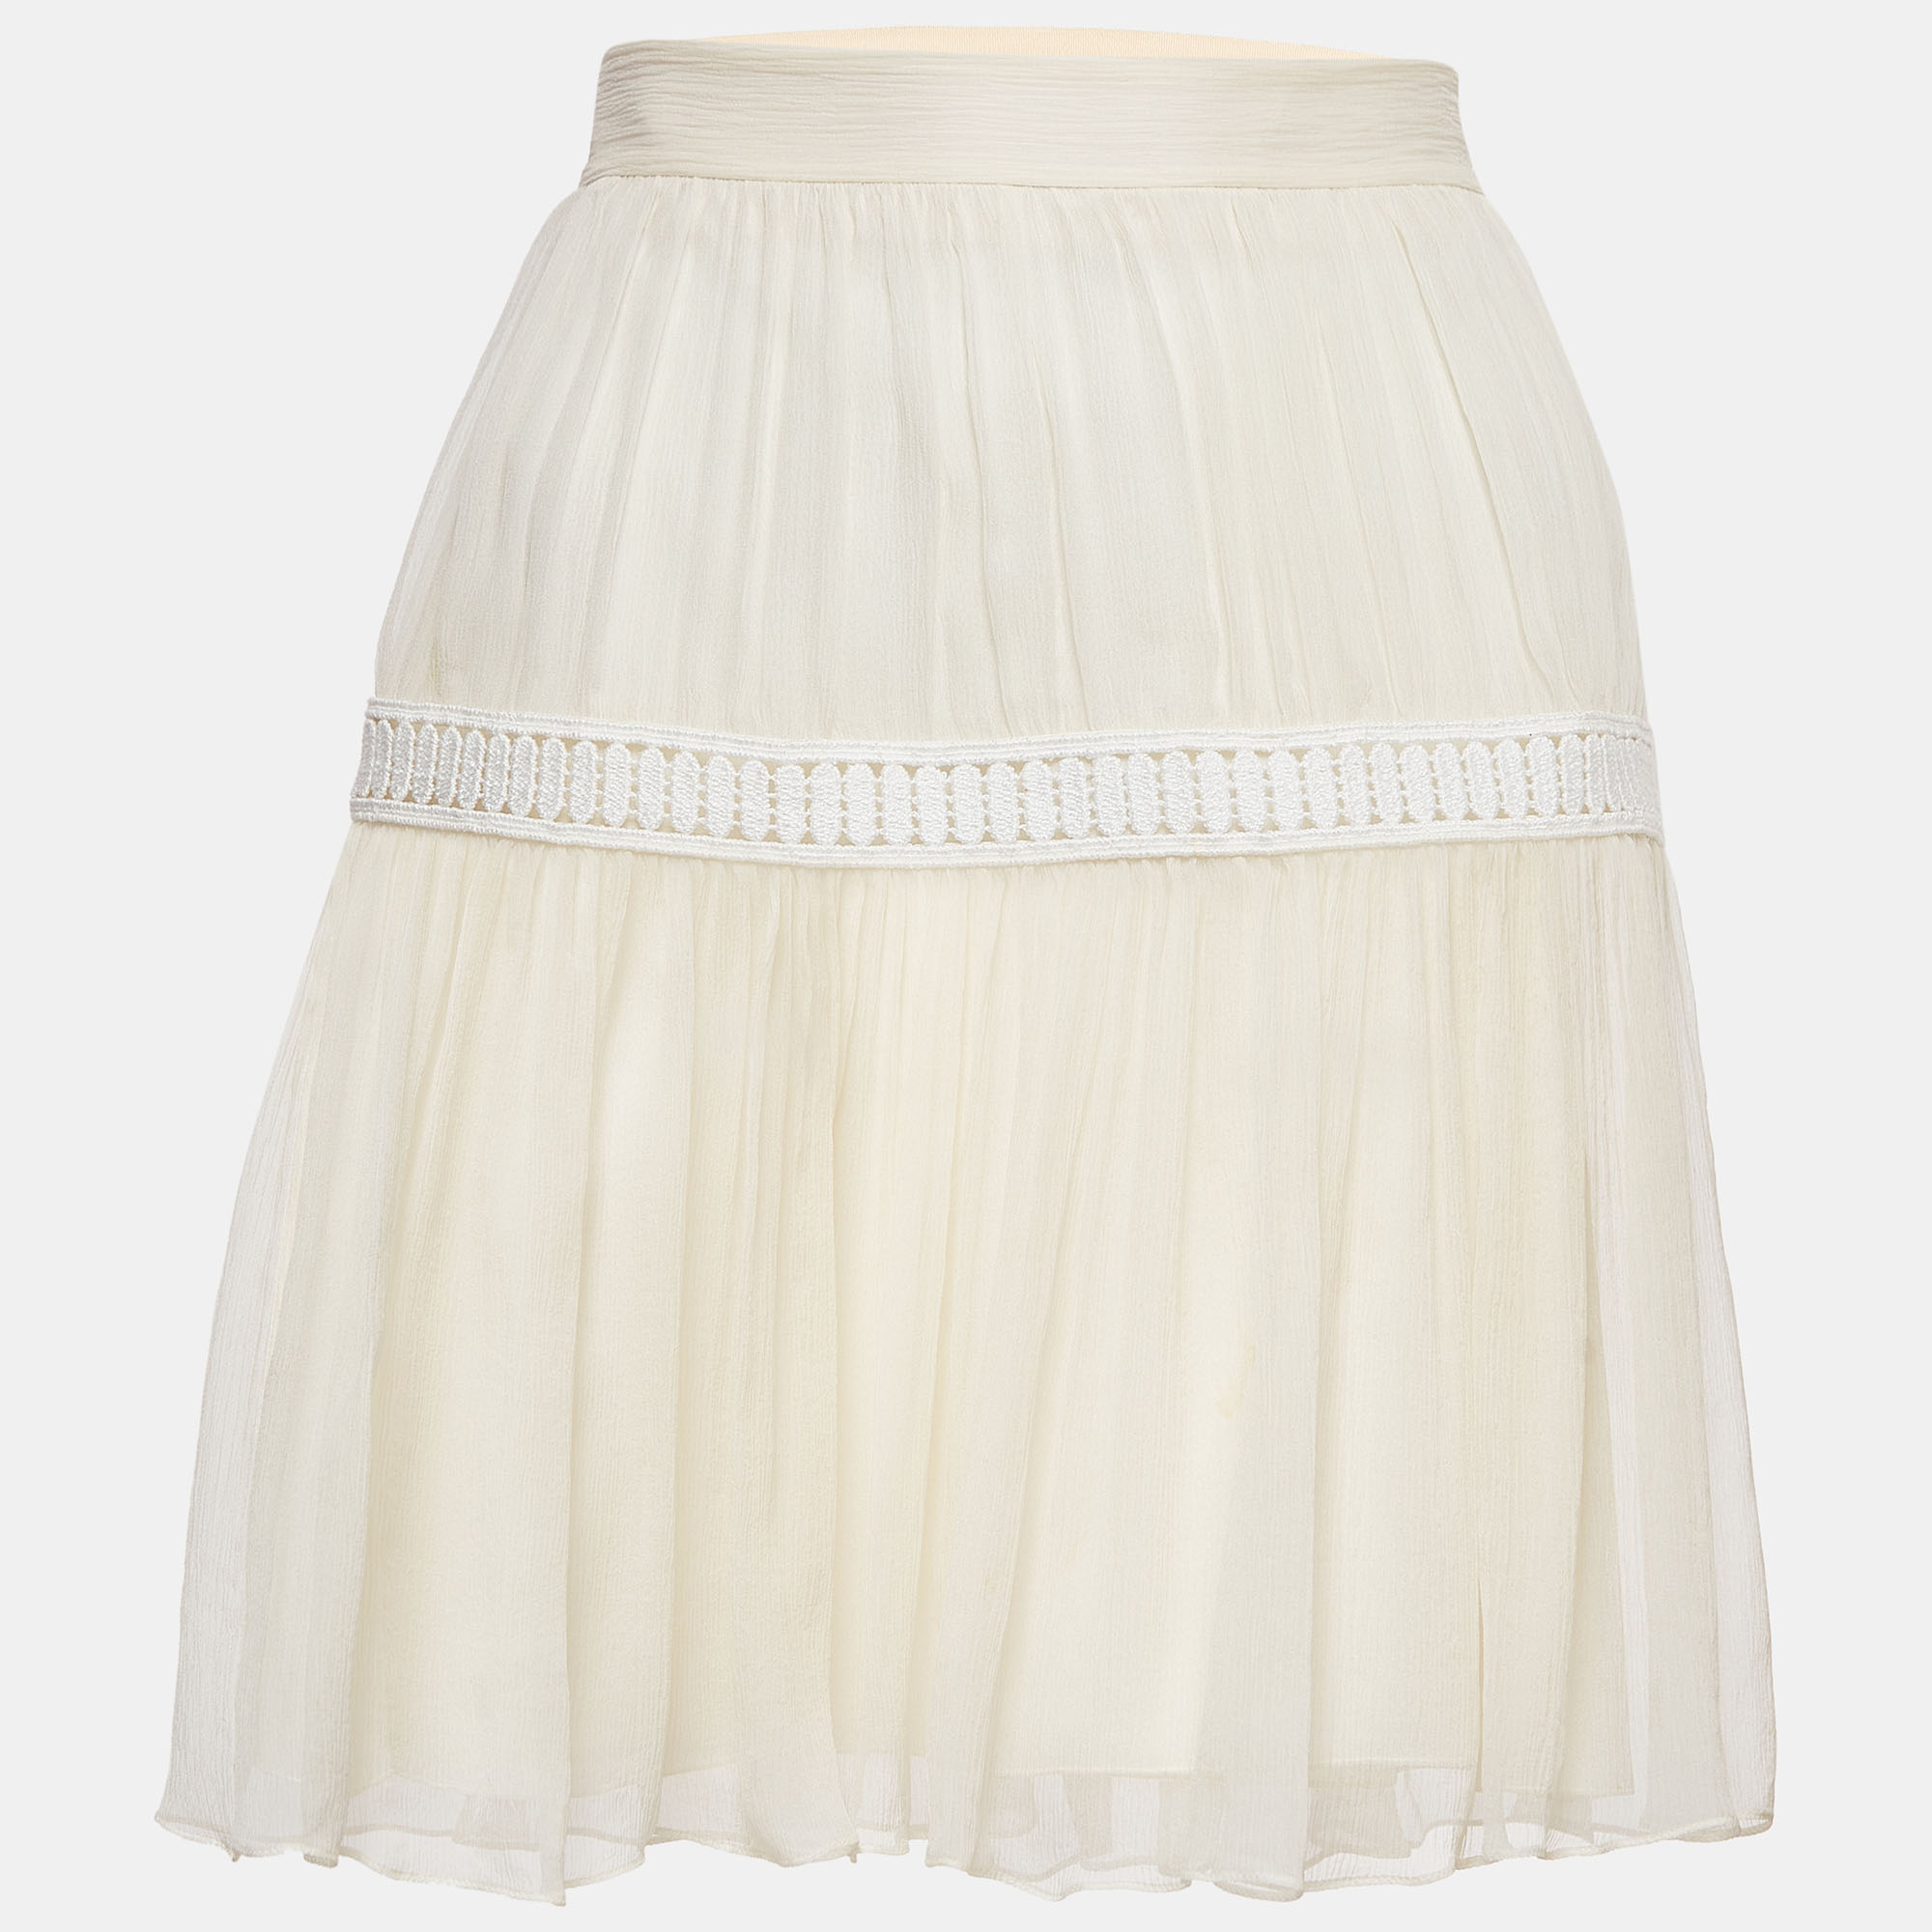 Chloe white lace trim silk gathered mini skirt s